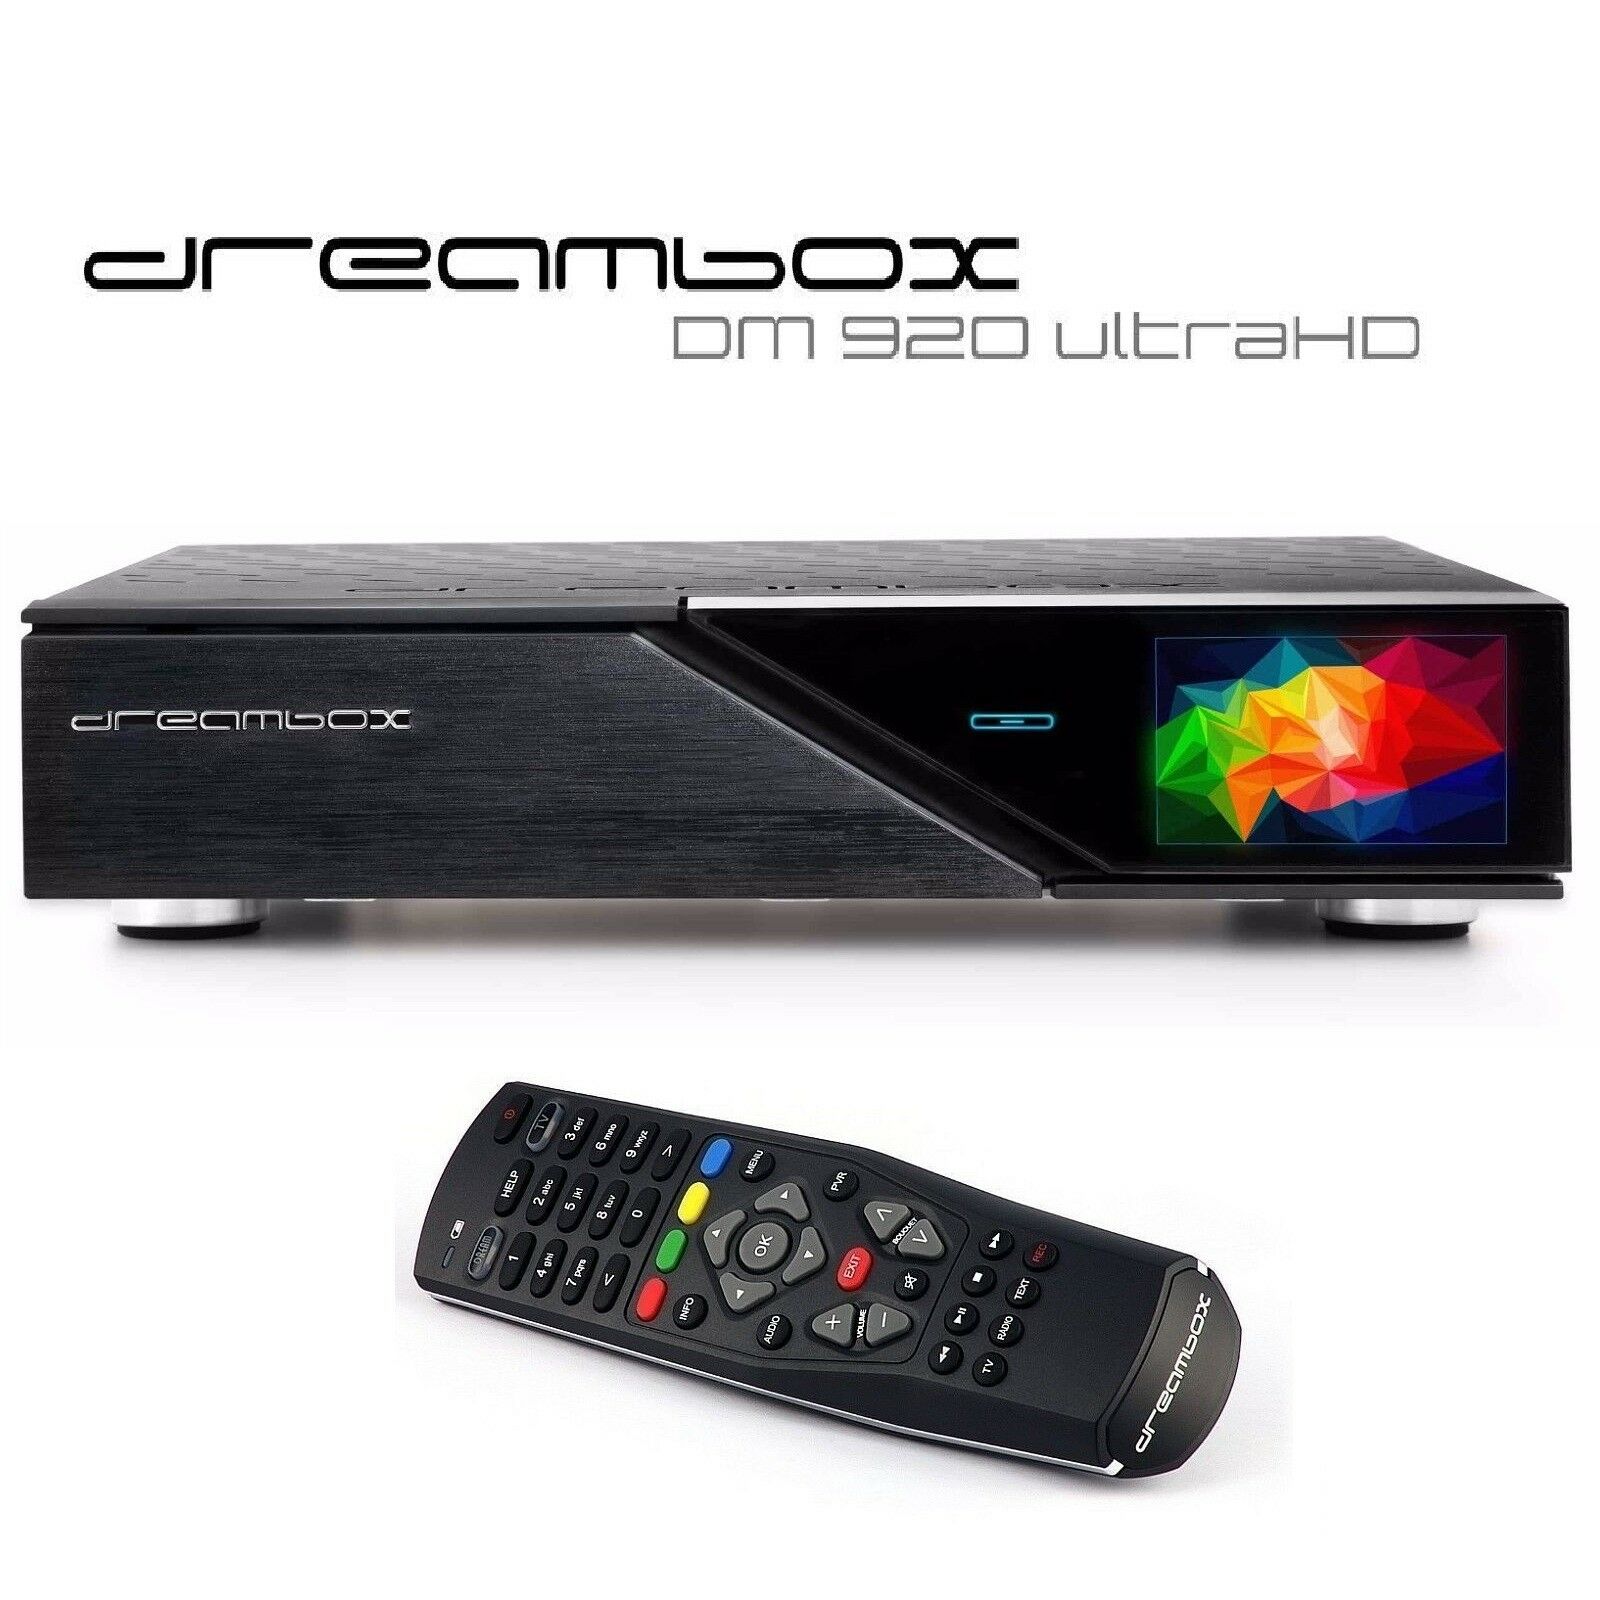 Dreambox DM920 UHD 4K 1x DVB-S2 FBC / 1x DVB-C FBC Tuner E2 Linux PVR Receiver